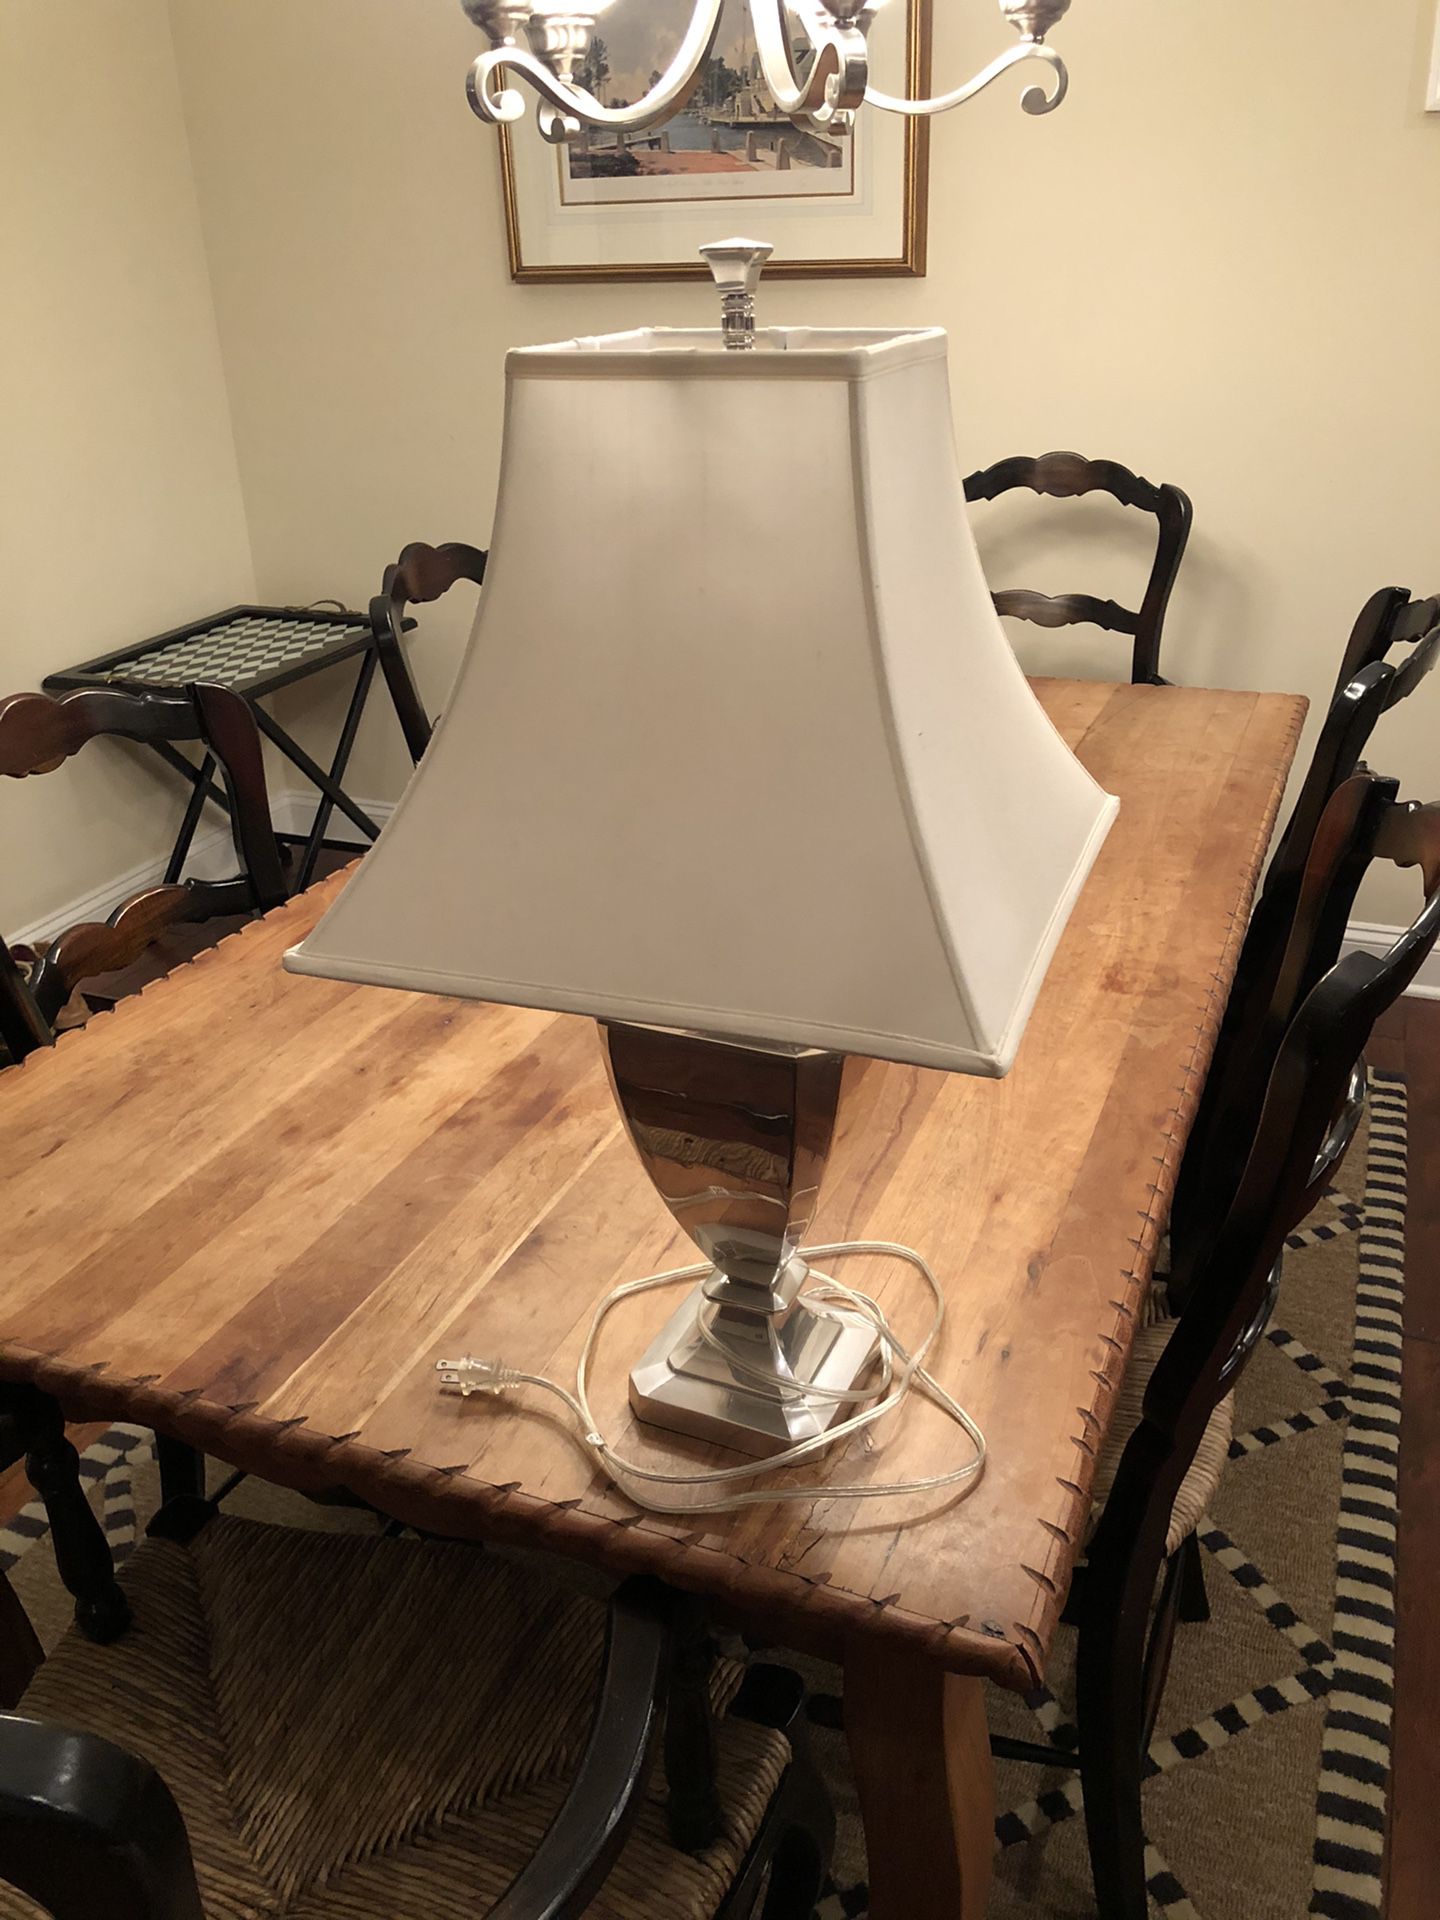 Restoration Hardware Lamp with shade